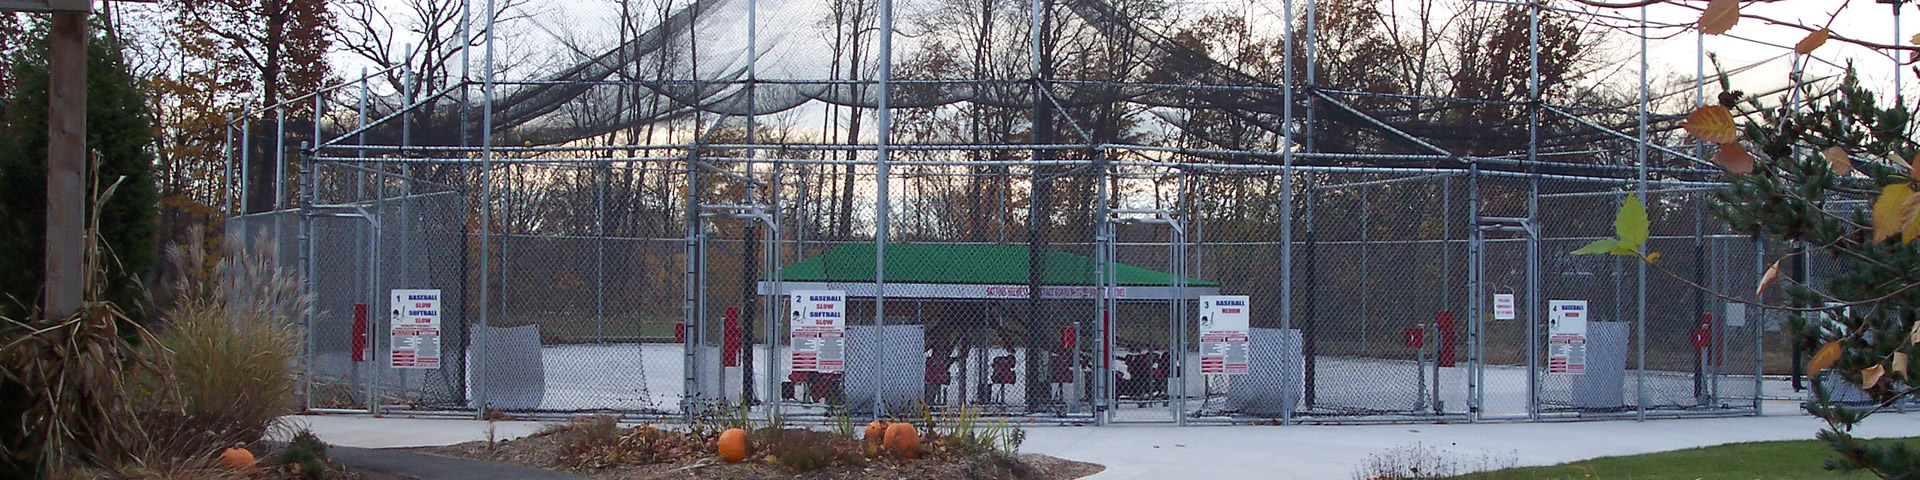 batting cage design for fun park